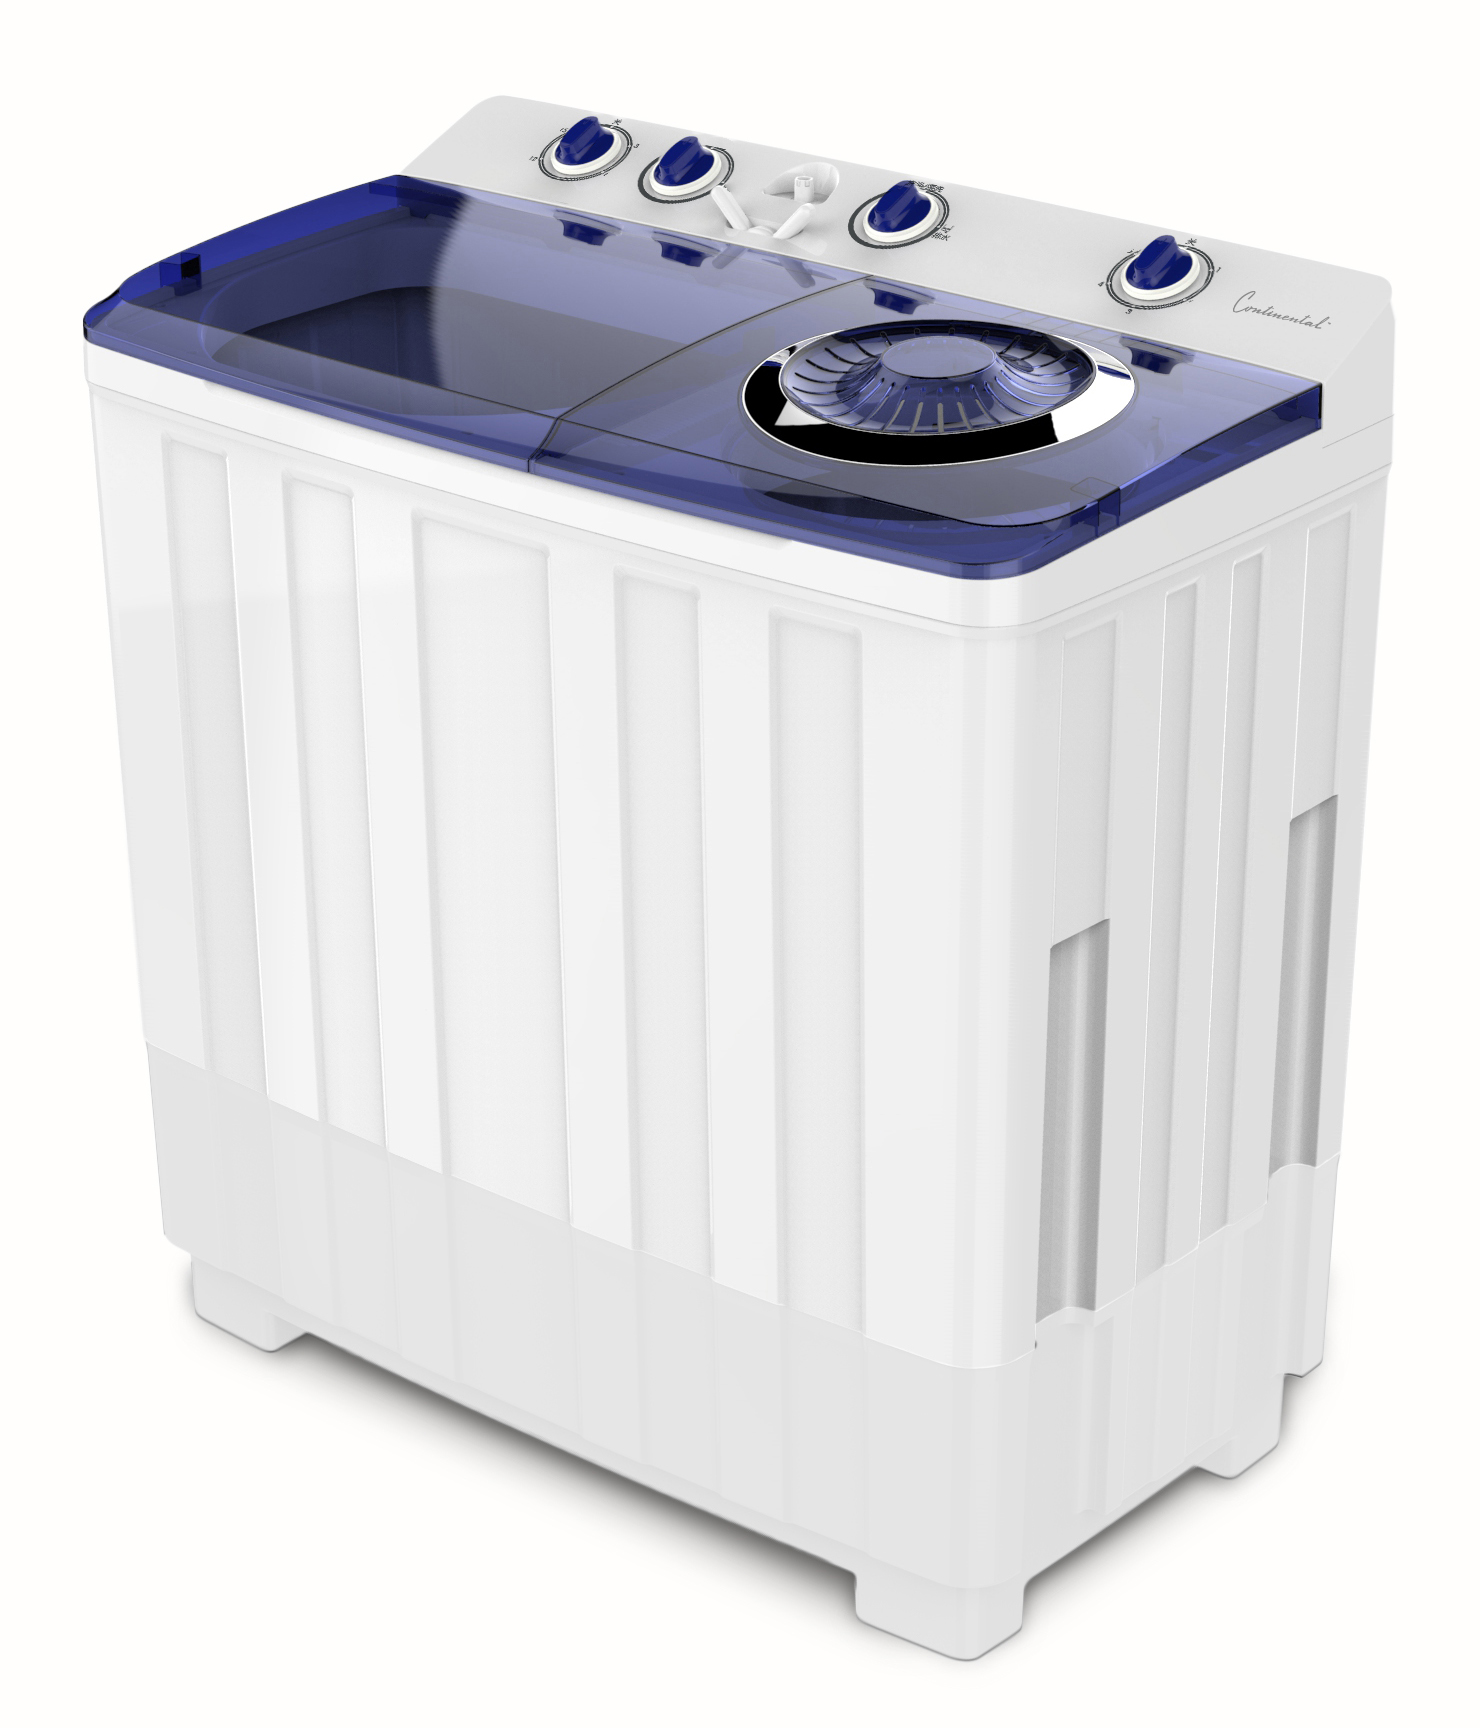 Twin Tub Washing Machine 18 Kg Capacity